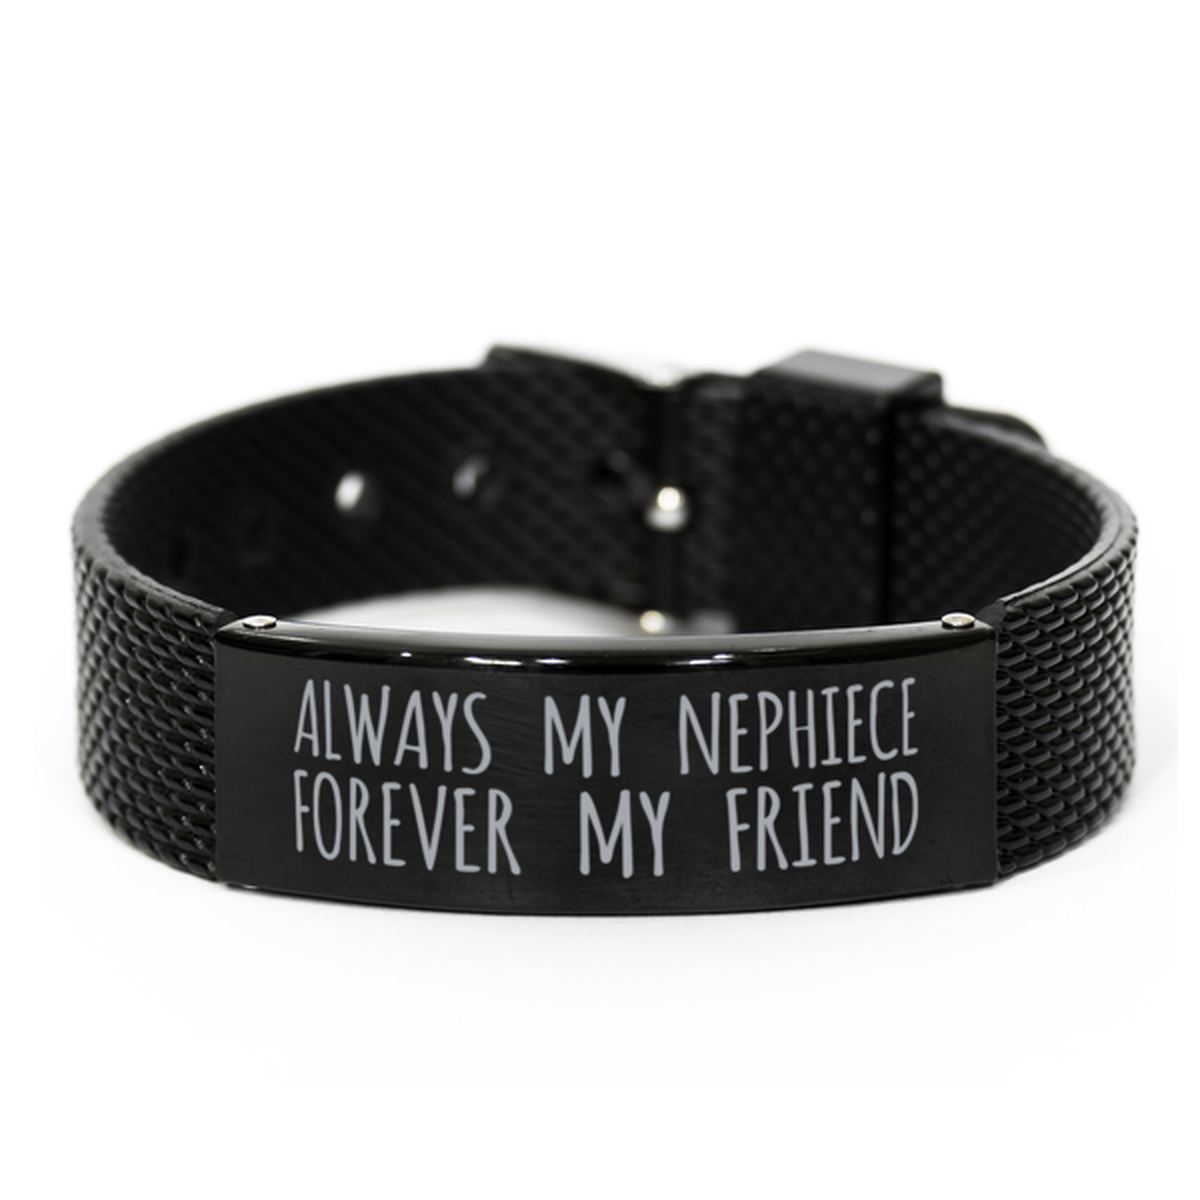 Inspirational Nephiece Black Shark Mesh Bracelet, Always My Nephiece Forever My Friend, Best Birthday Gifts for Family Friends